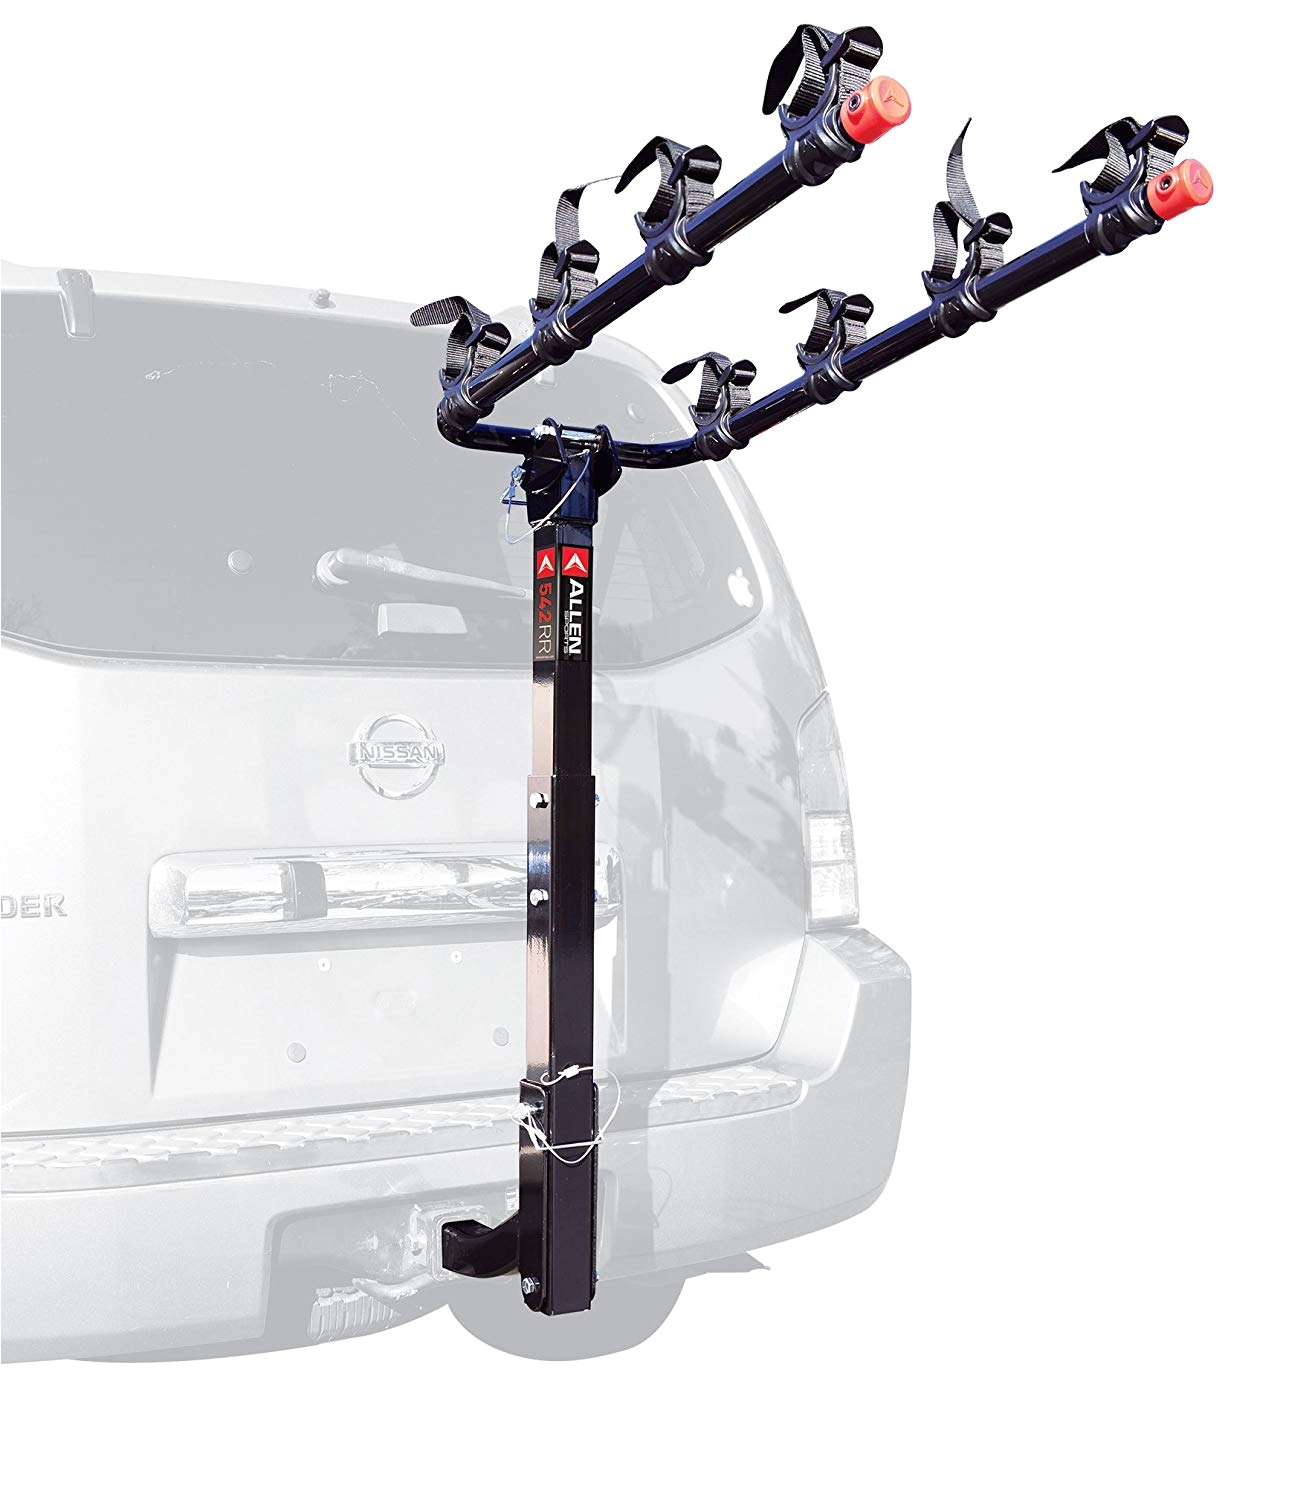 Thule 987xt 6-ski Adapter for Thule Hitch Mount Bike Racks Car Racks Carriers Amazon Com